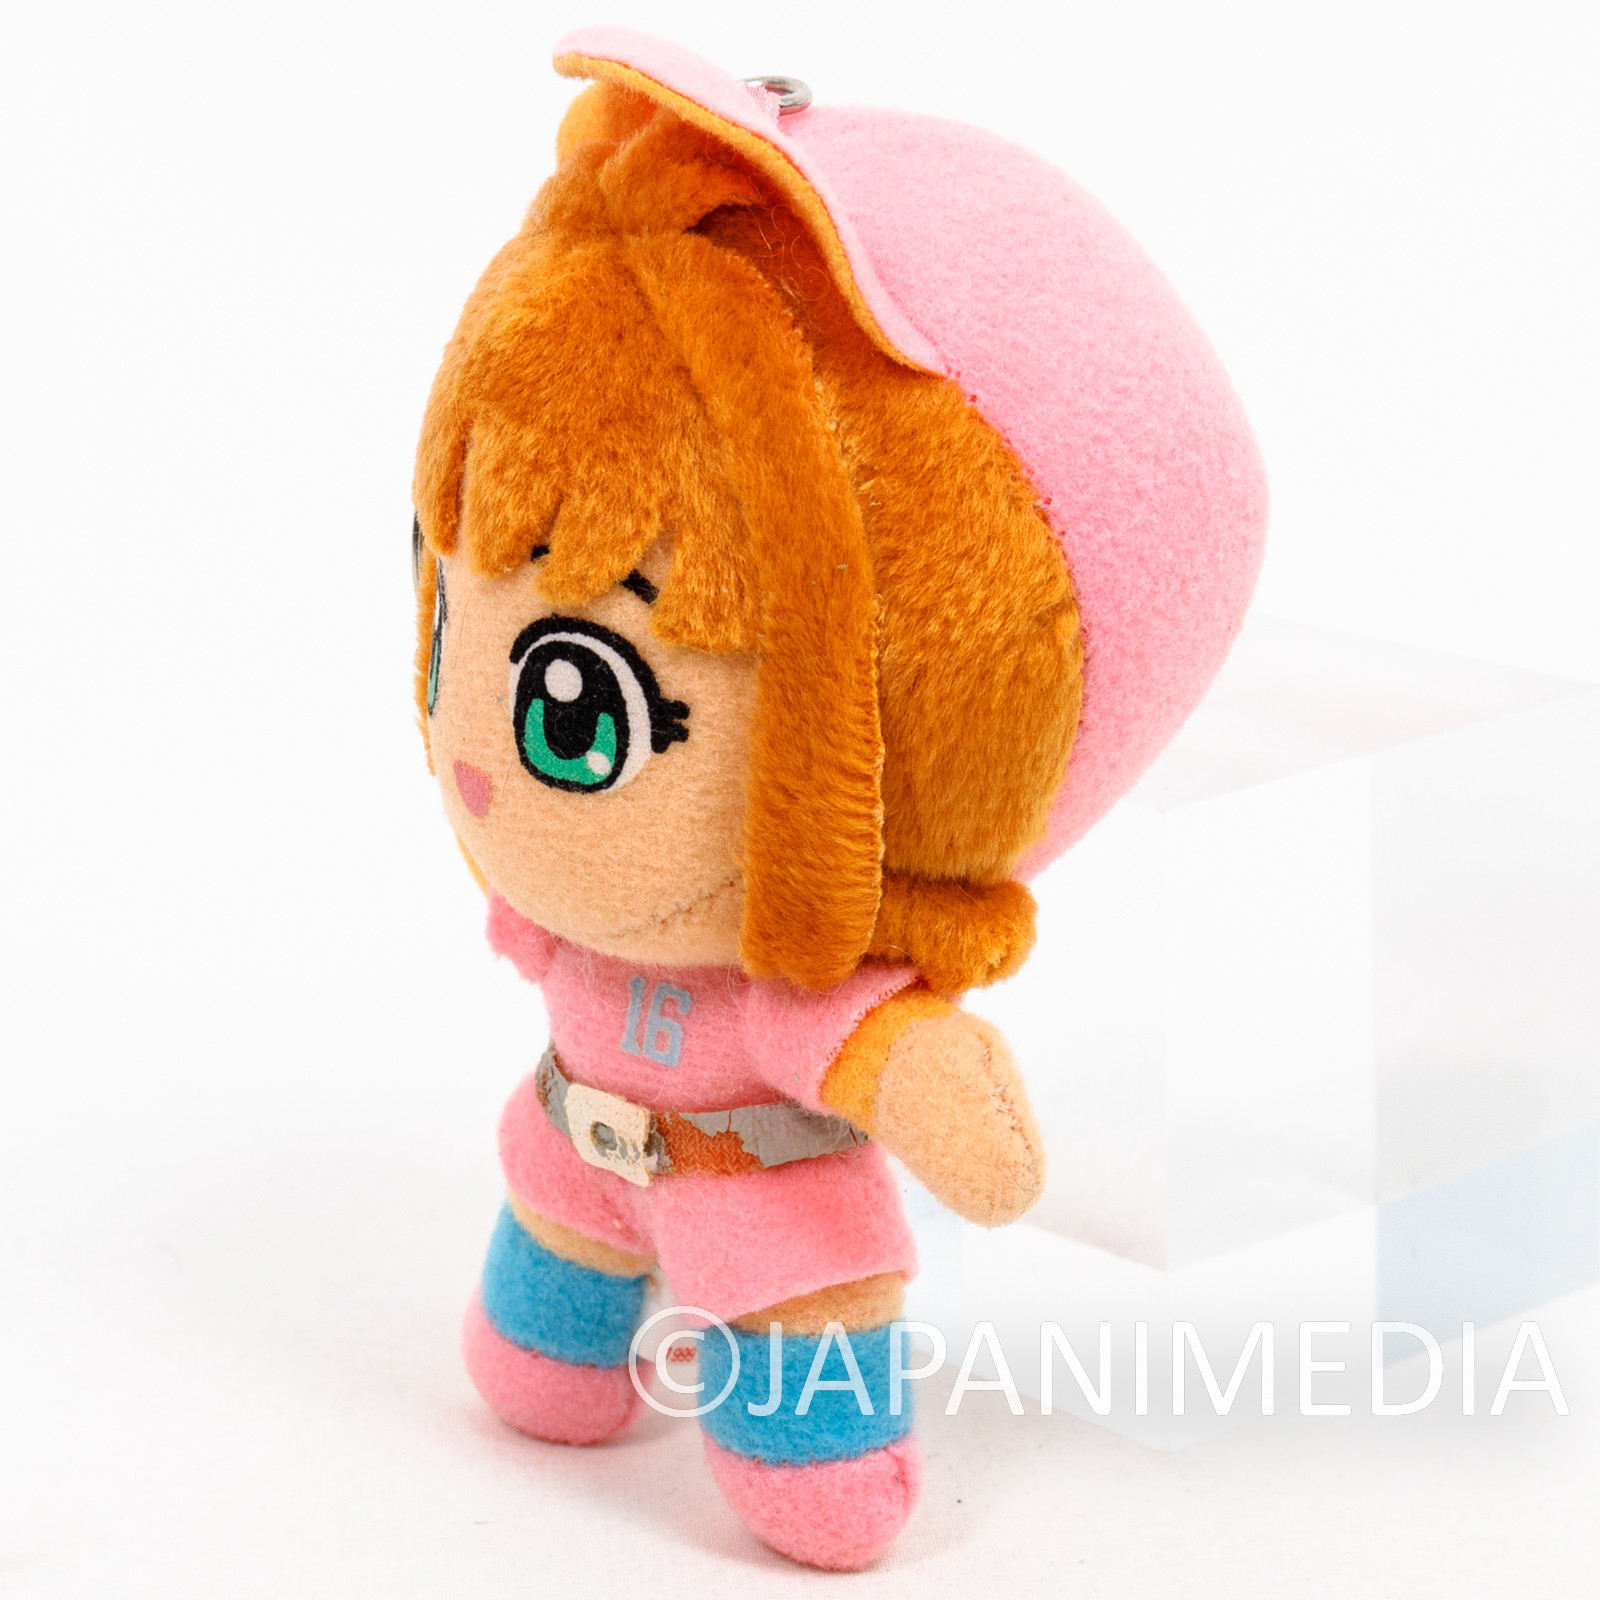 Cardcaptor Sakura Plush Doll Keychain #2 BANPRESTO